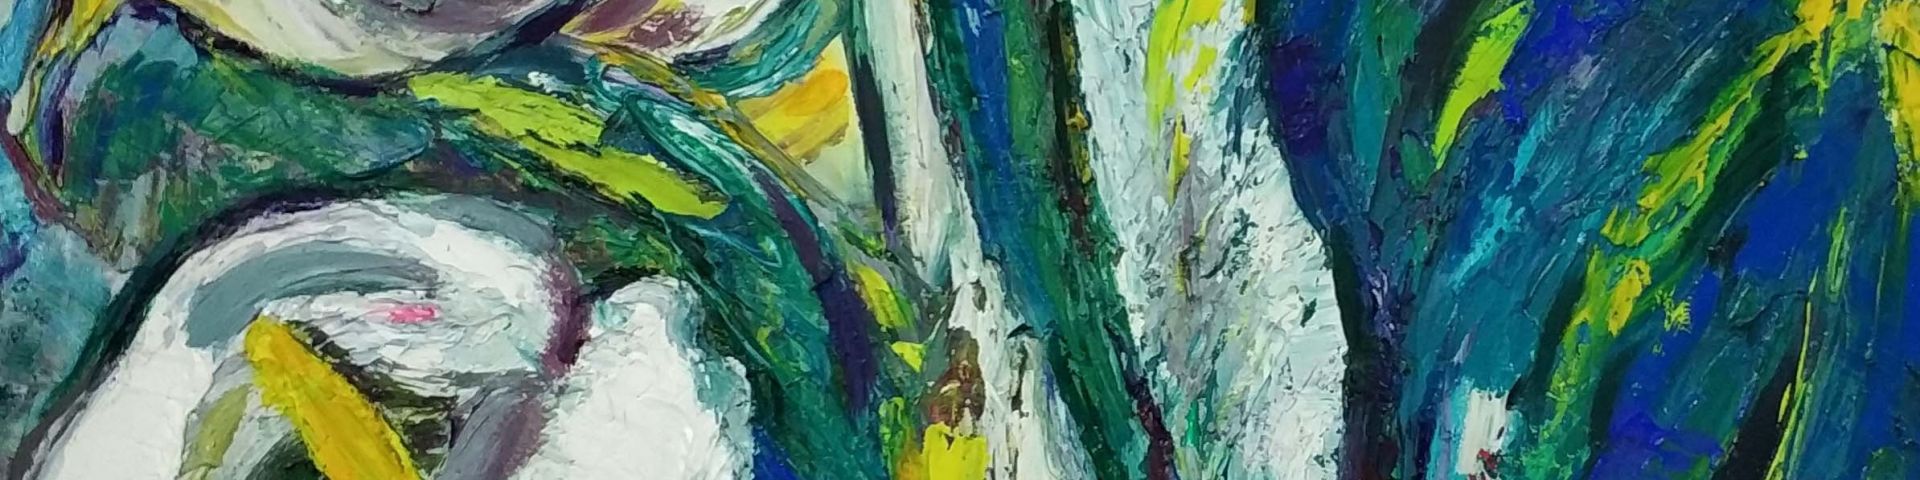 Galina Raspopina-Abyssinian-Oil on canvas-50x80cm-2019-USD800